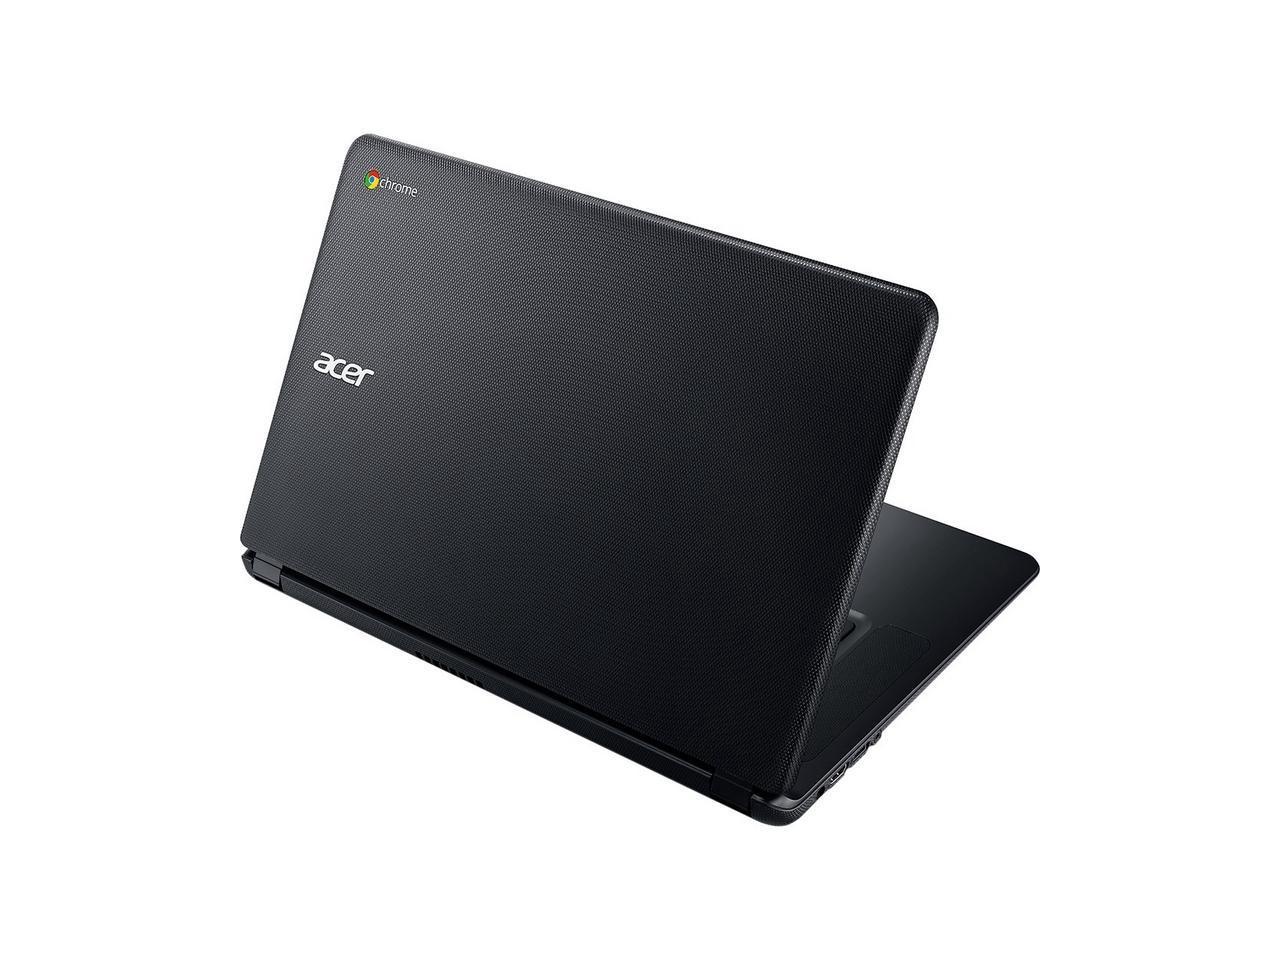 Acer 15.6" Intel Core i3 Dual-Core 2 GHz 4 GB Ram 32 GB SSD Chrome OS|C910-3916